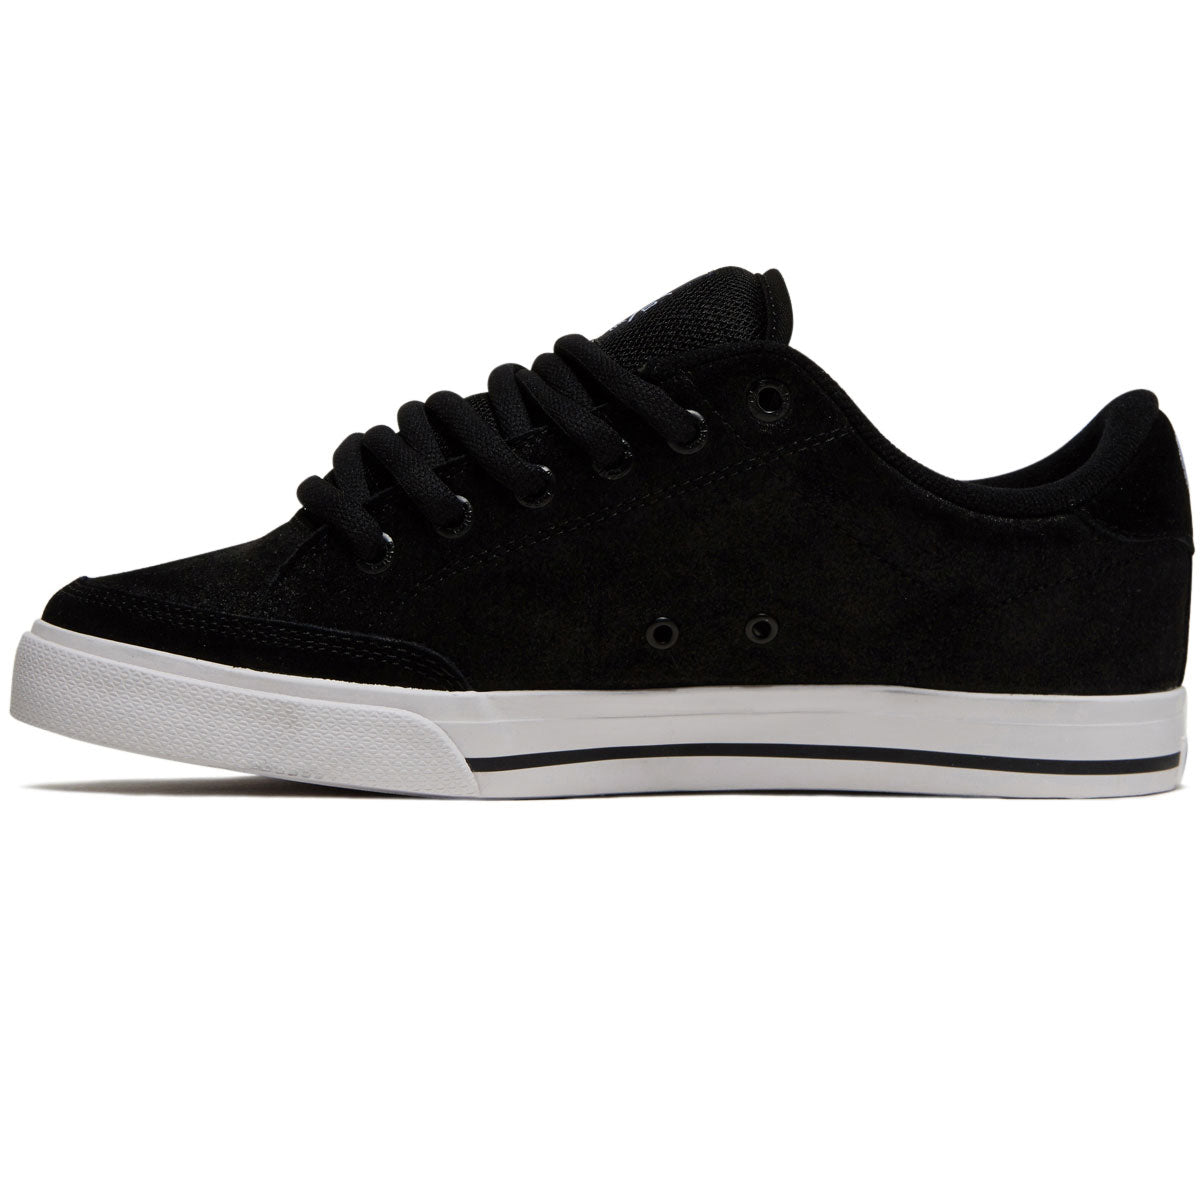 C1rca Al 50 Shoes - Worn Black/White image 2